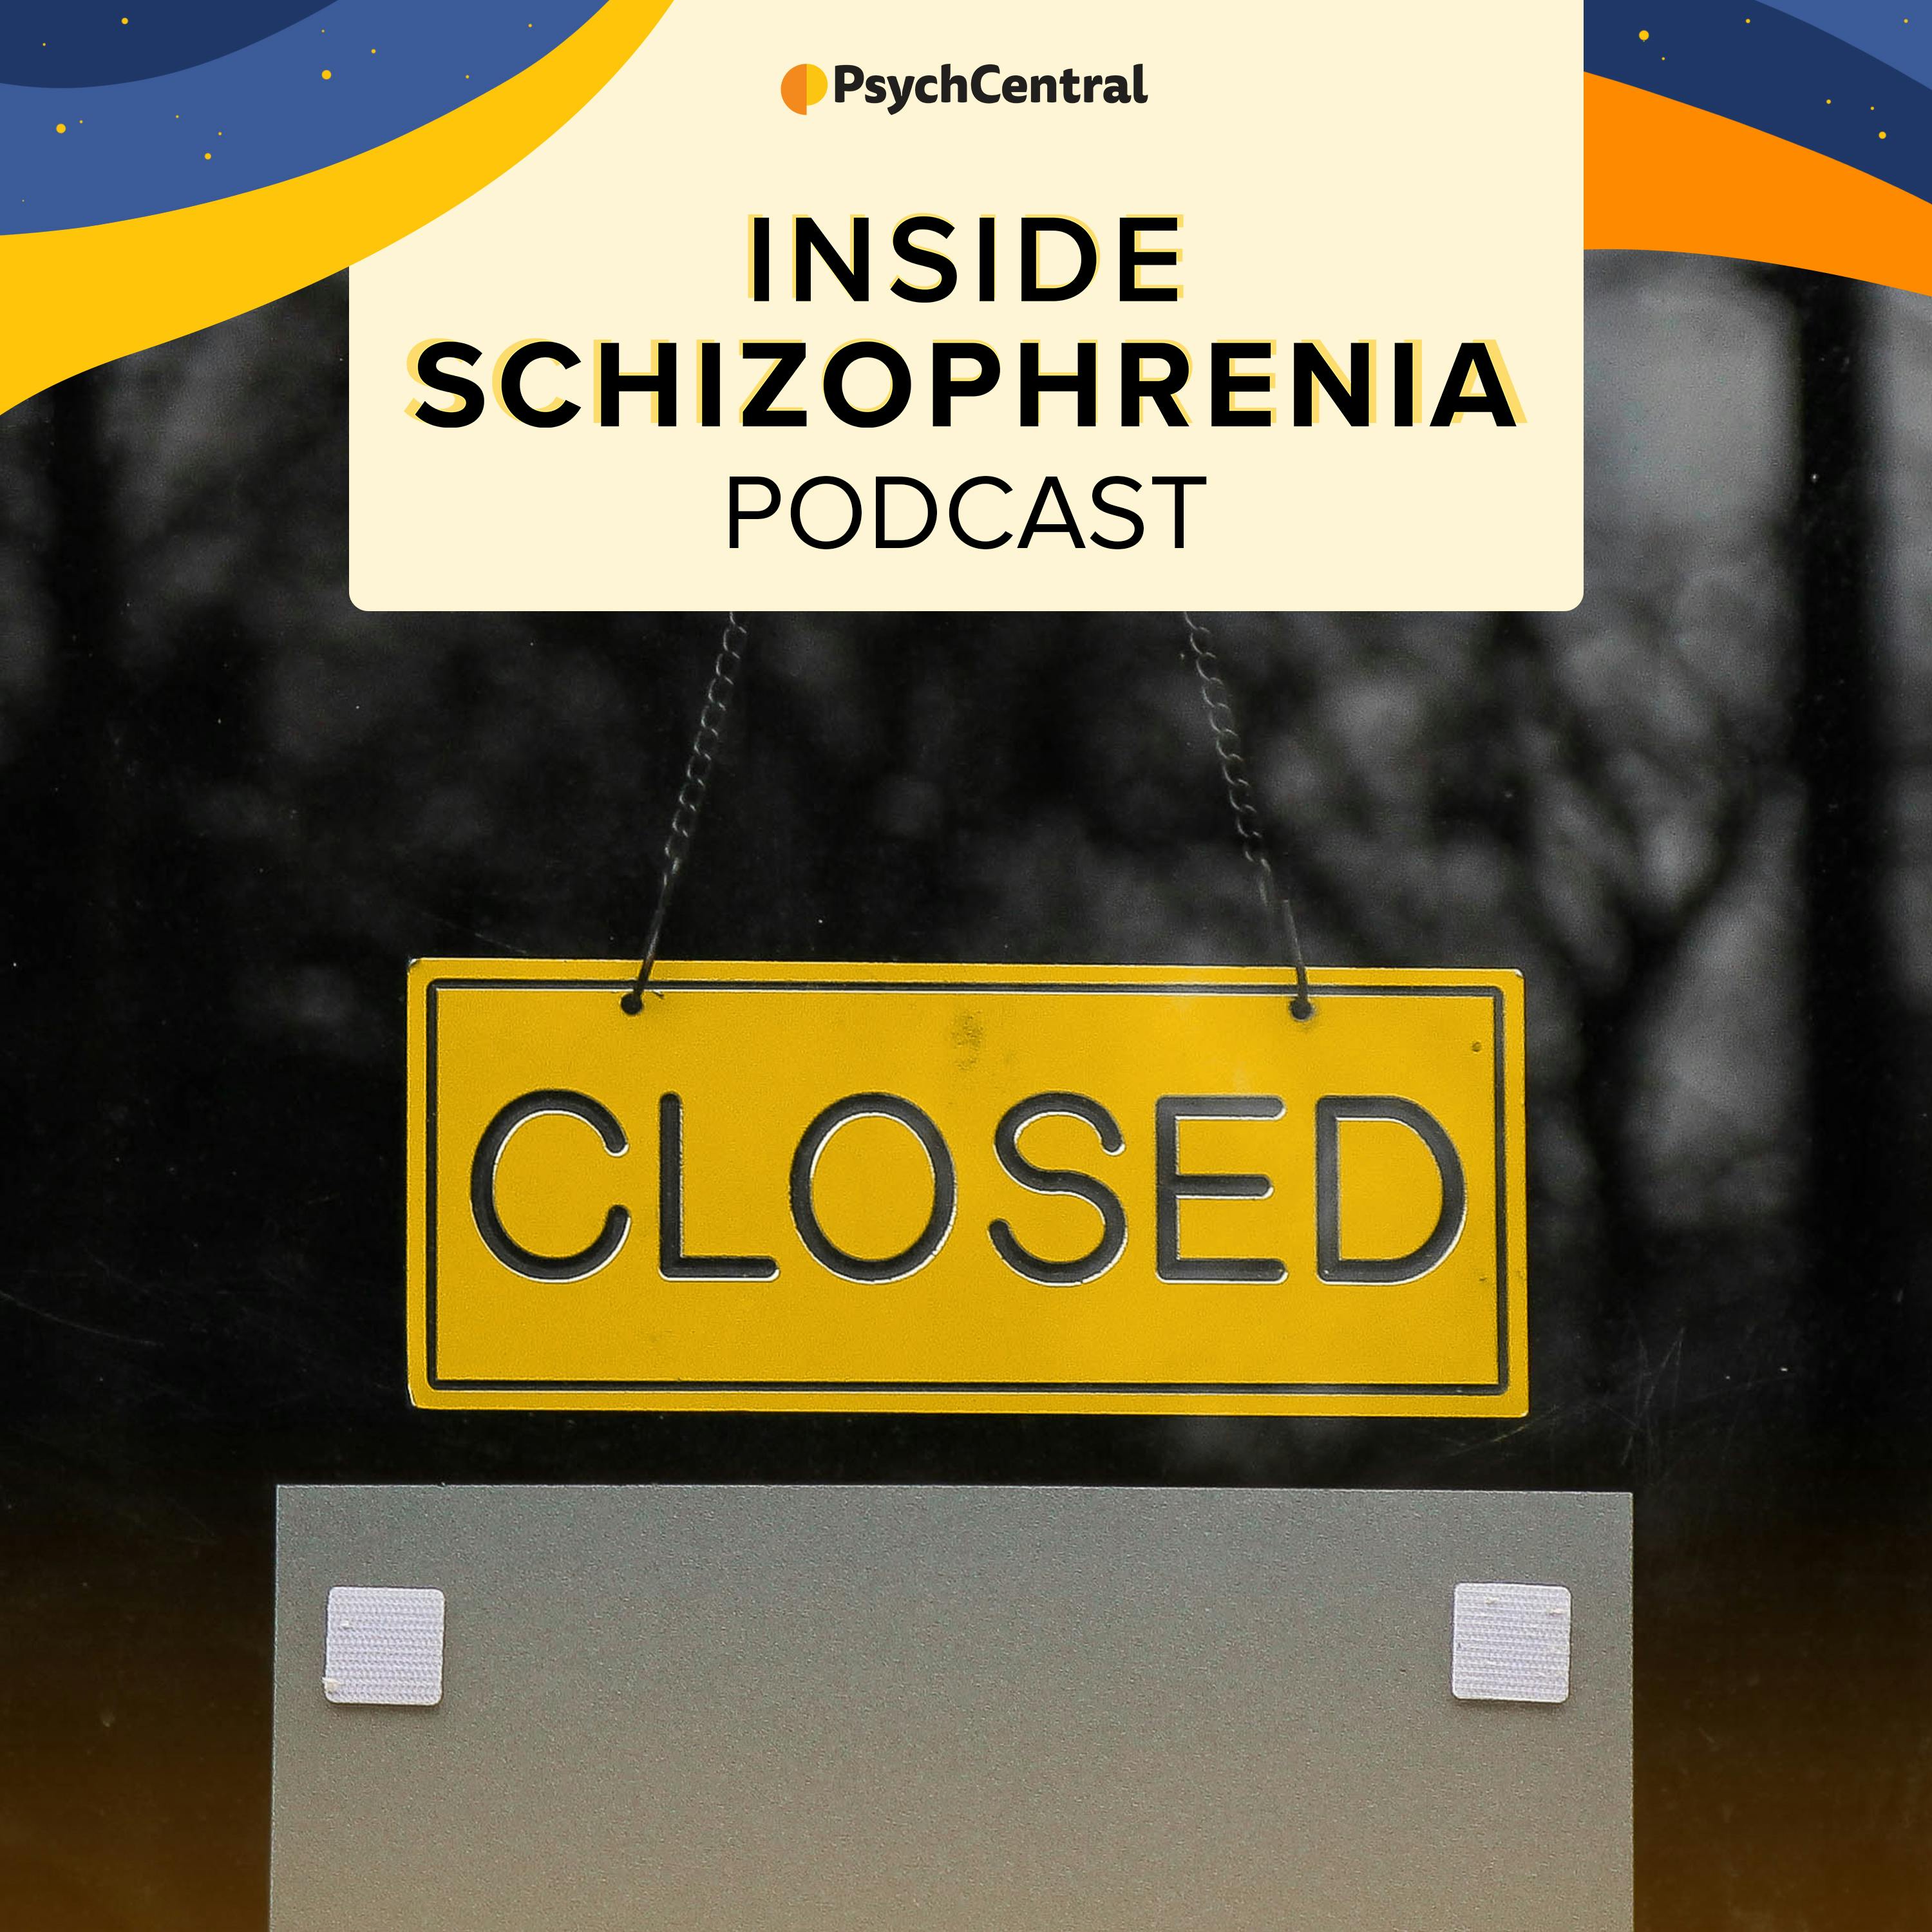 Stigma in the Medical Community Against Schizophrenia